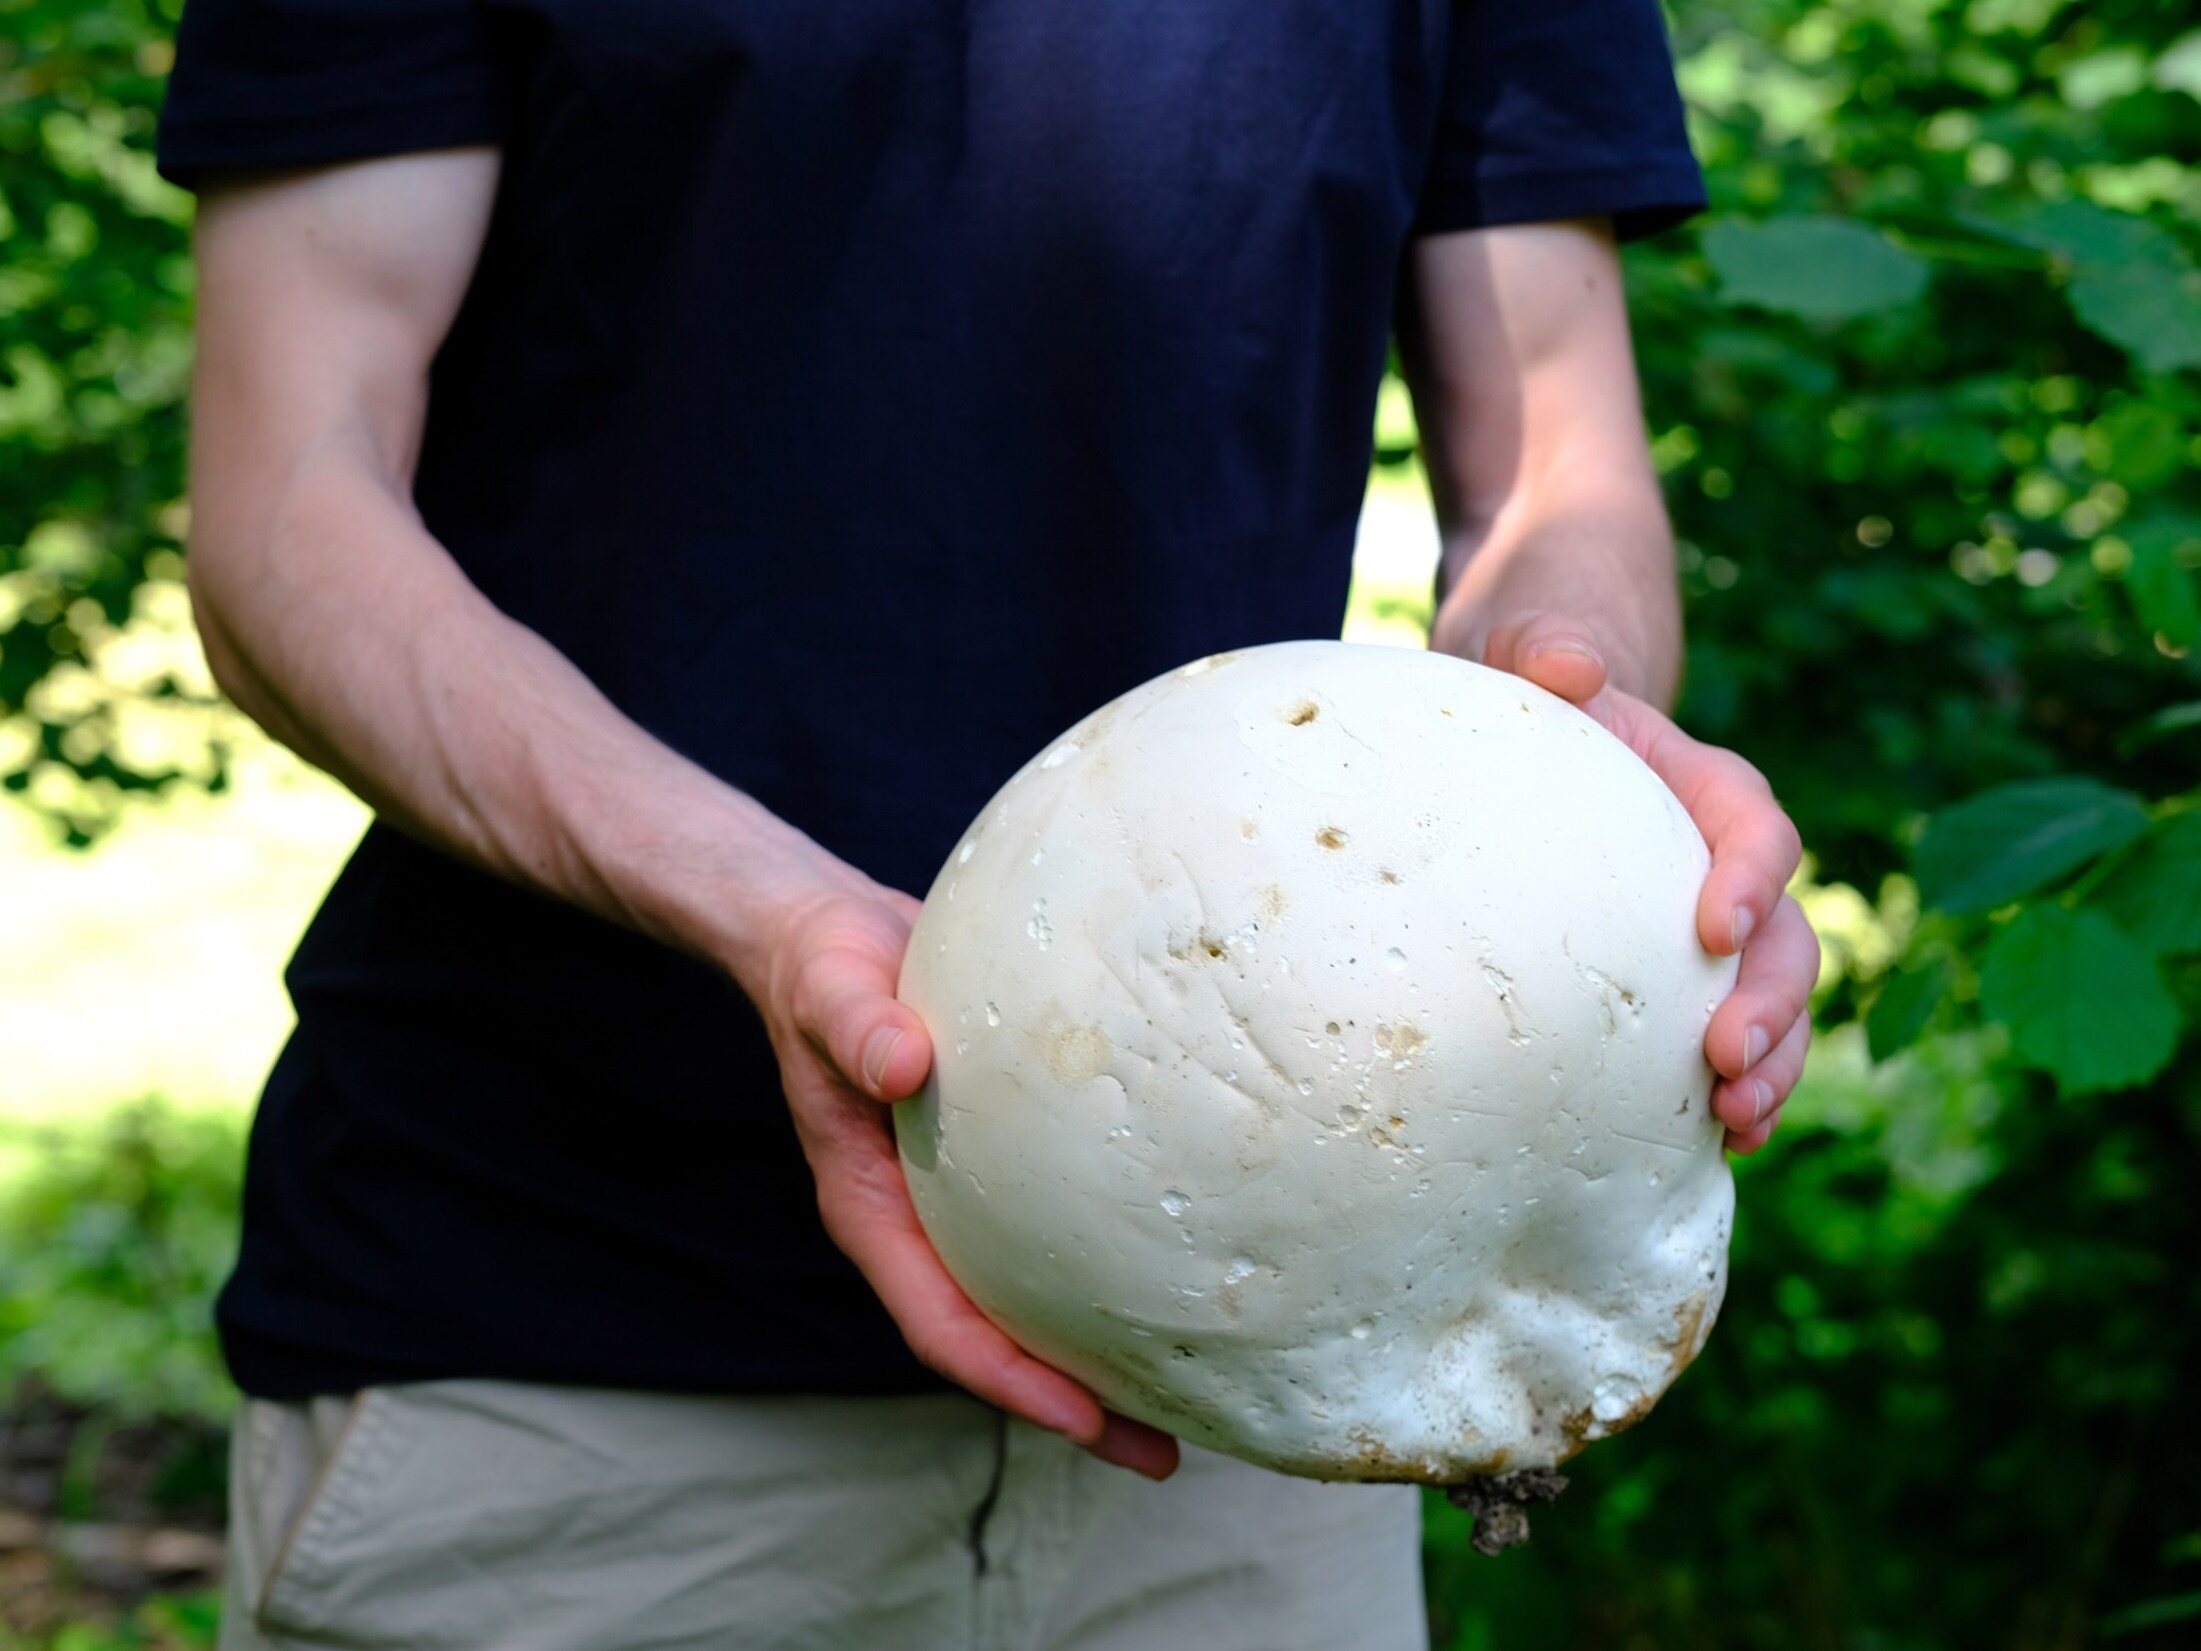 This mushroom is a mushroom picker's dream.  The giant skullcap looks like a big white ball